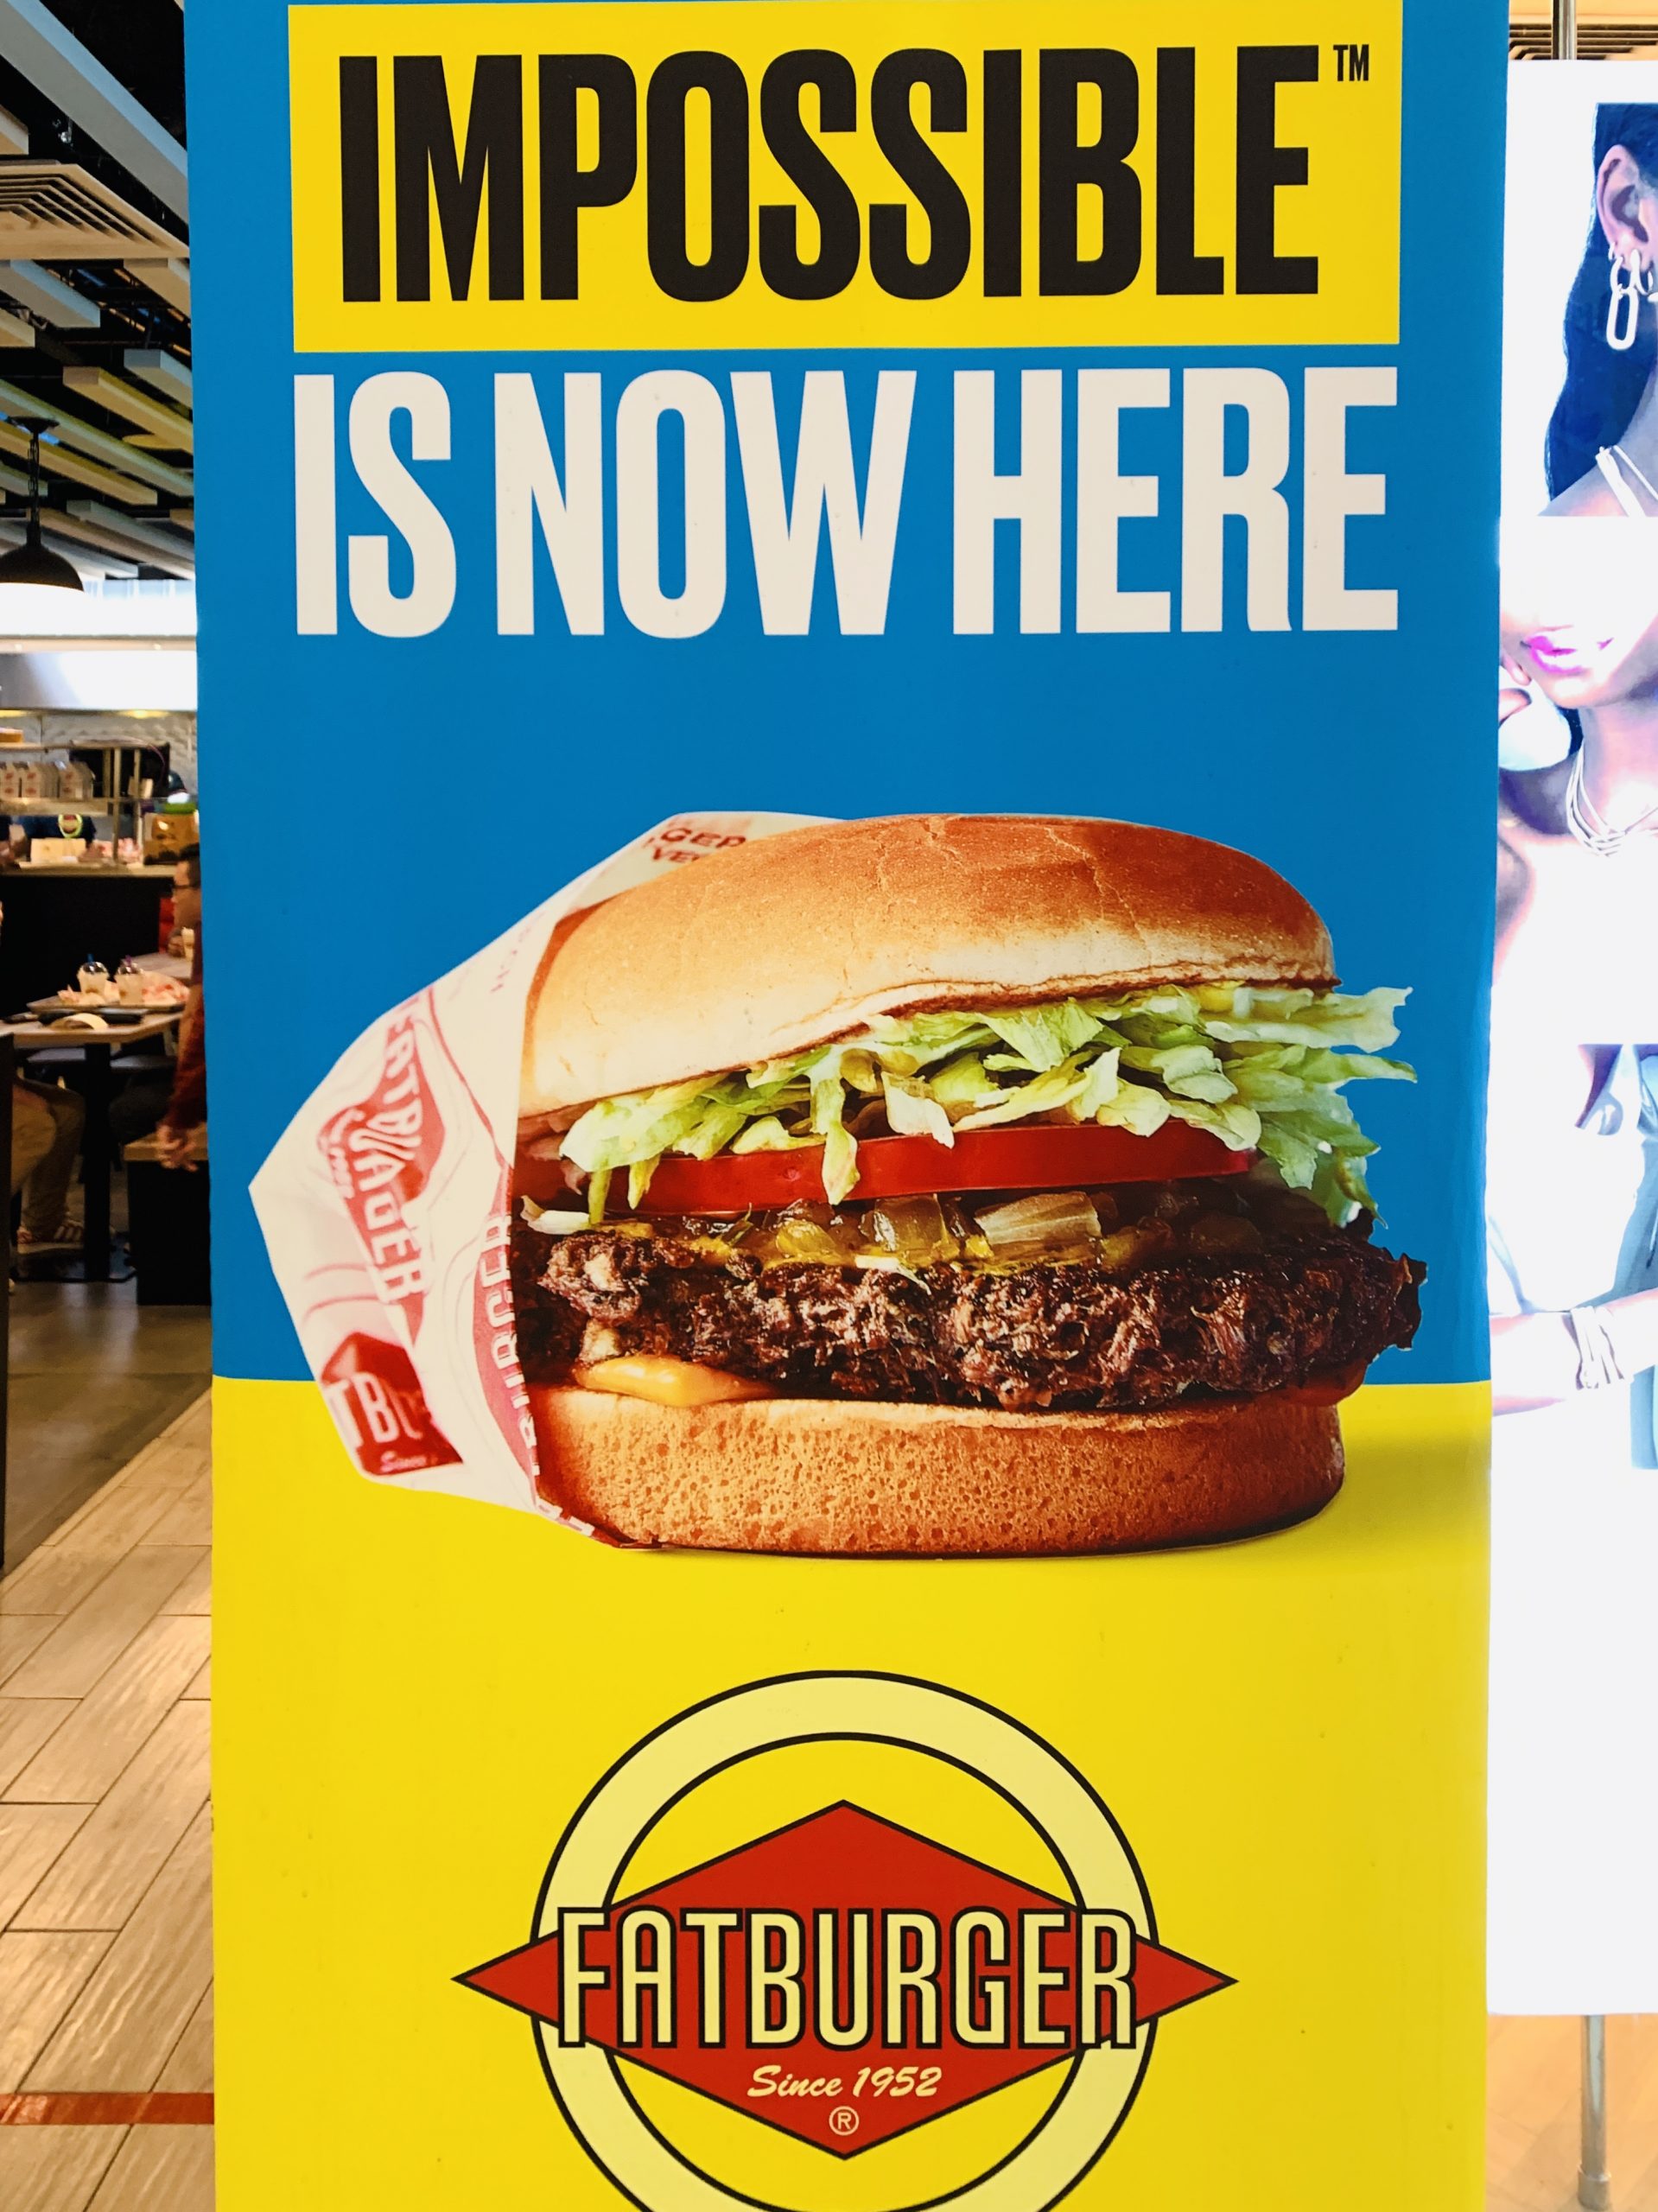 Fatburger - Impossible Burger Poster